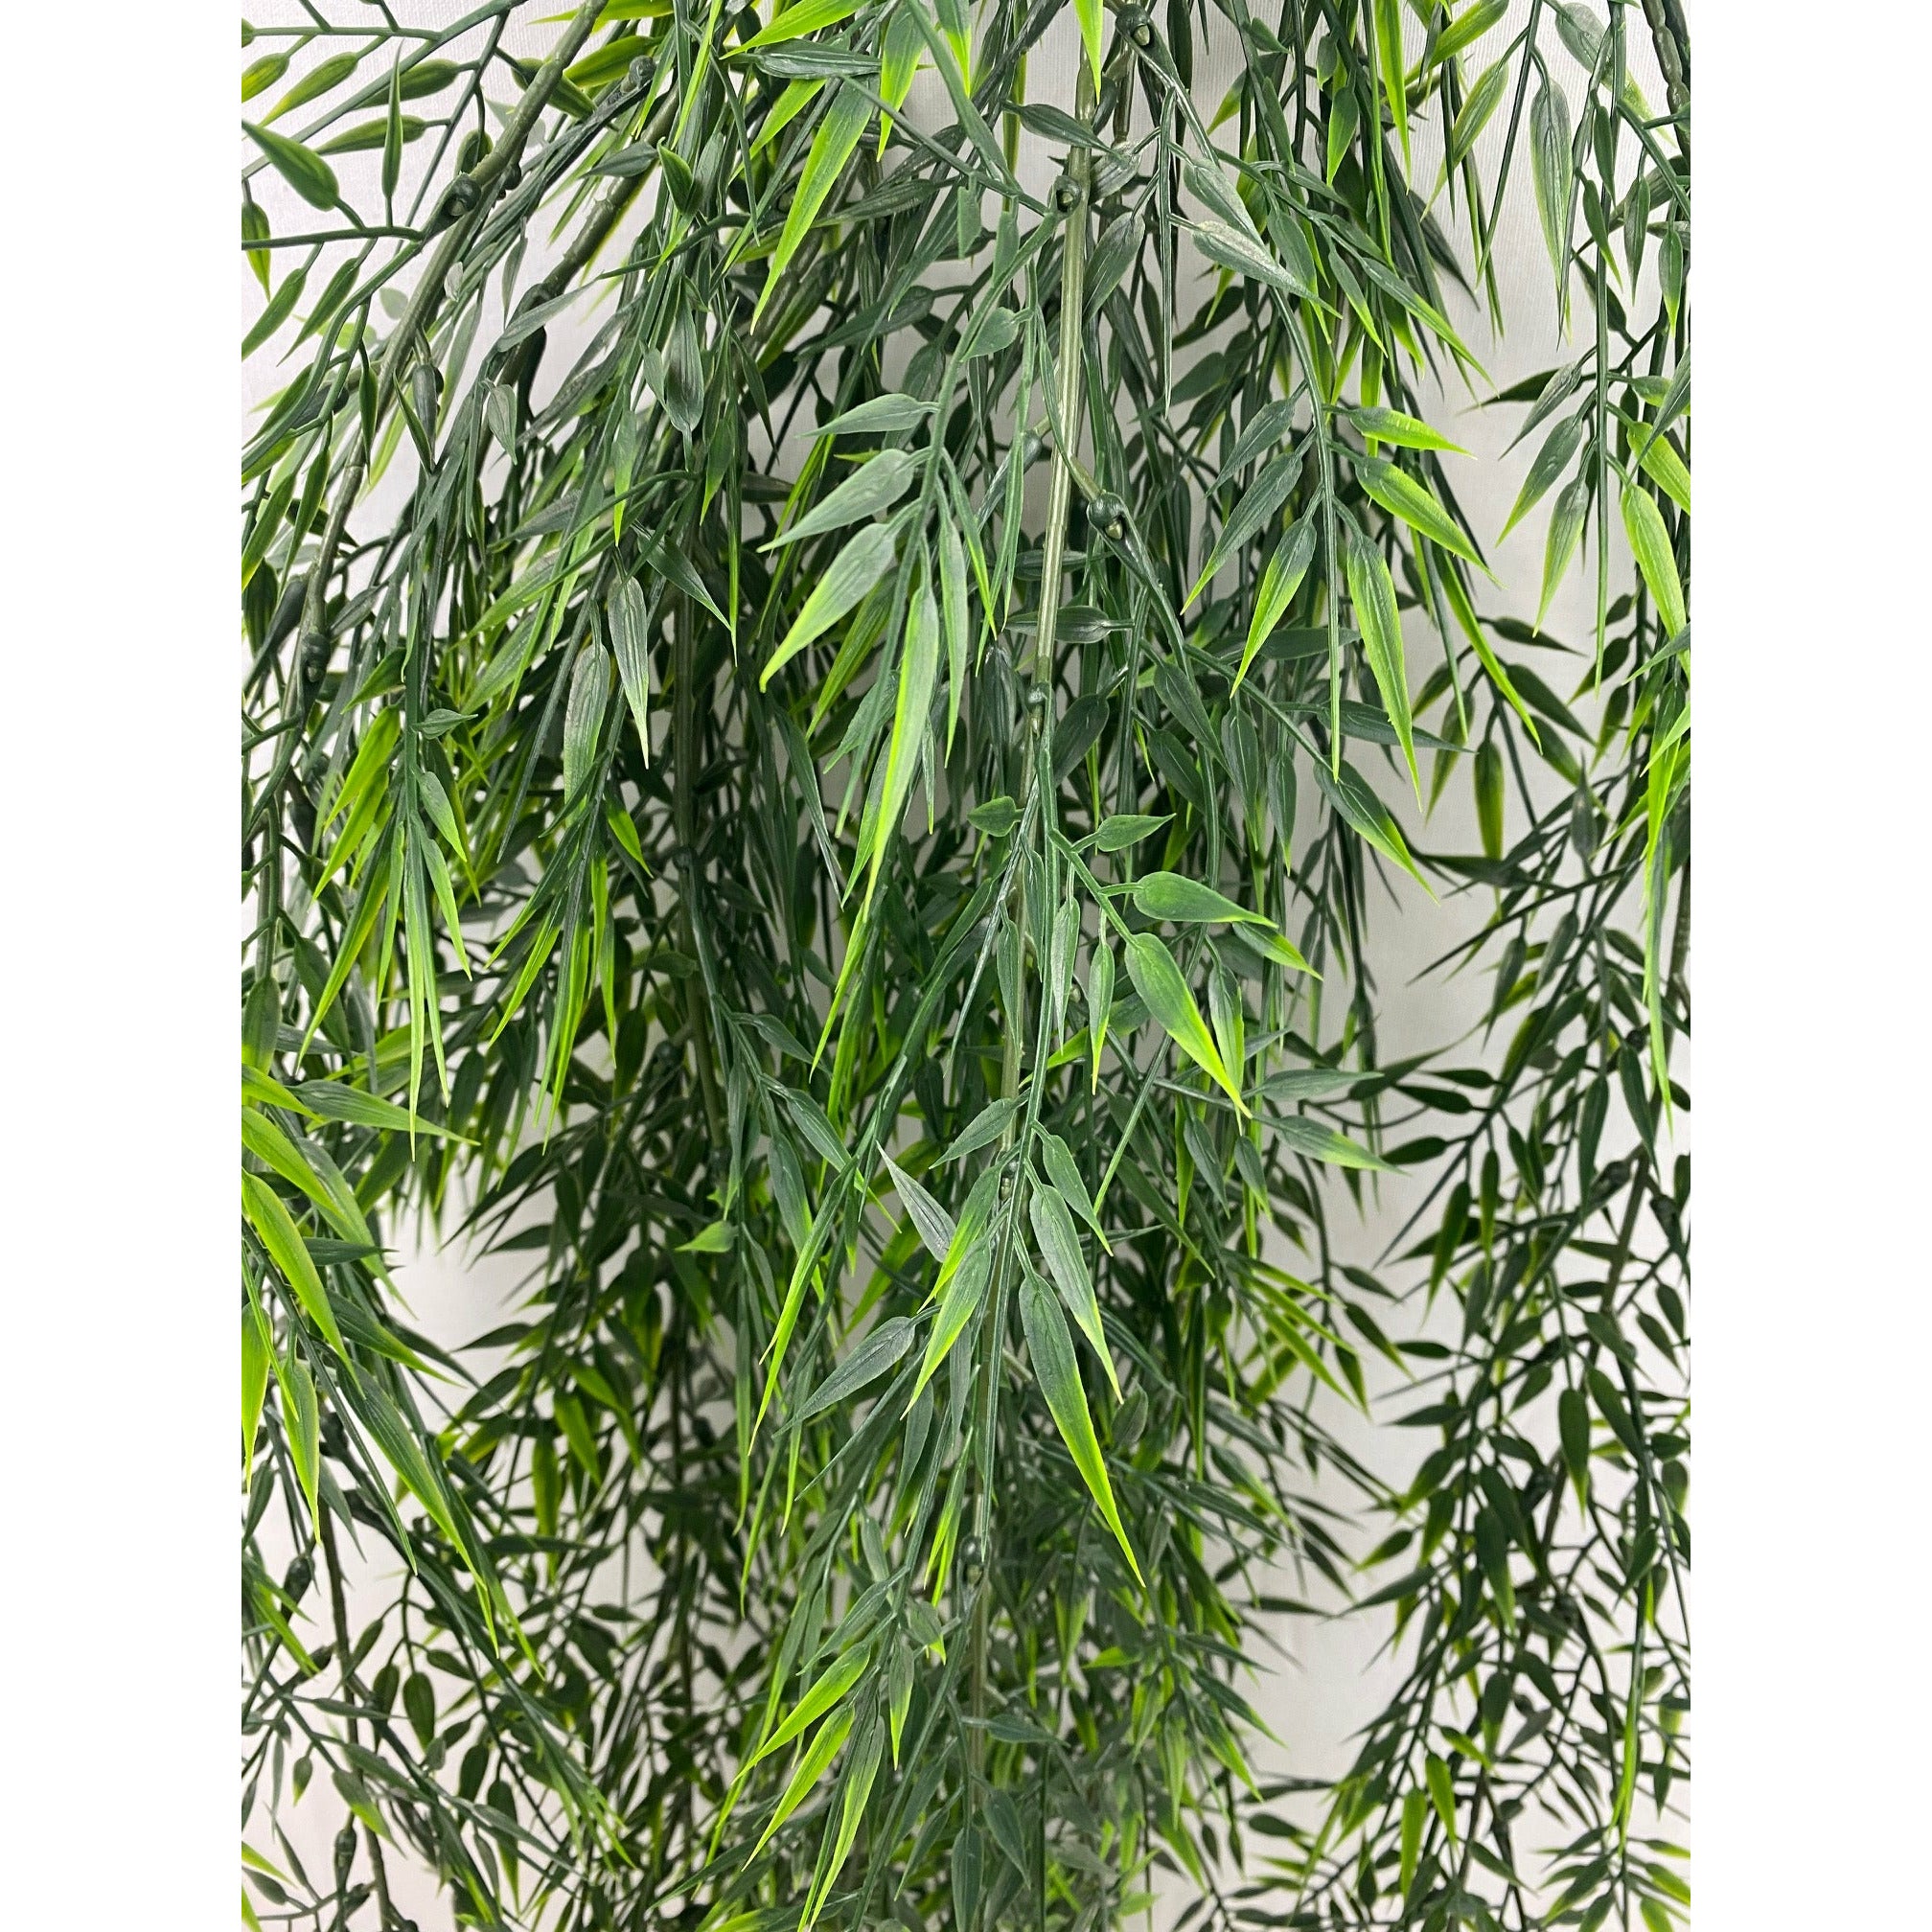 Green Bamboo shoot hanging bush